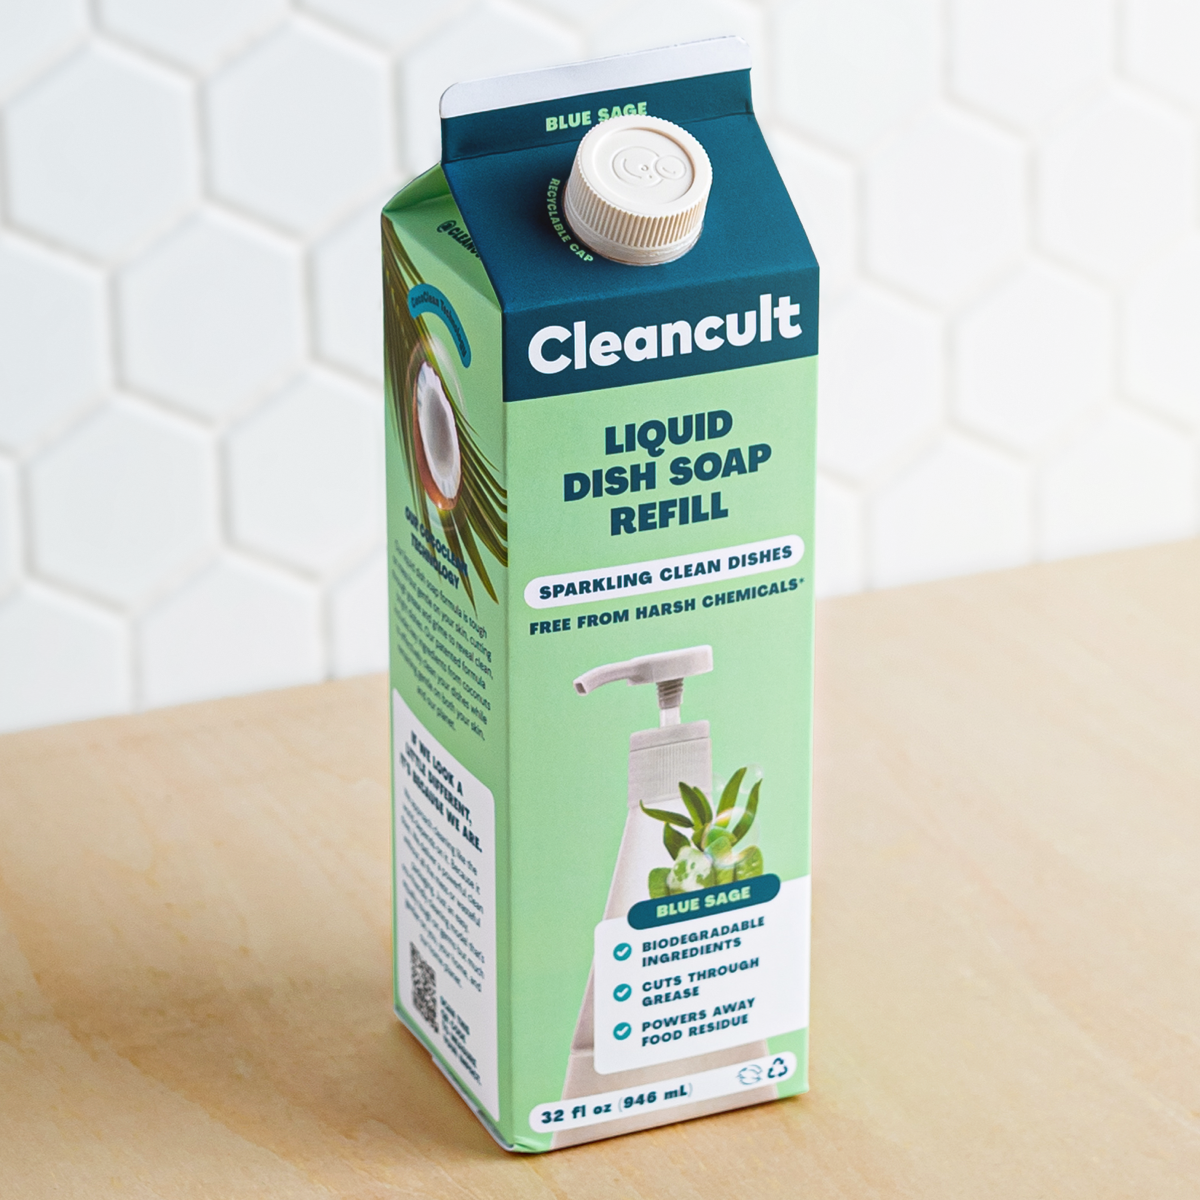 Cleancult Liquid Dish Soap in plastic-free packaging.